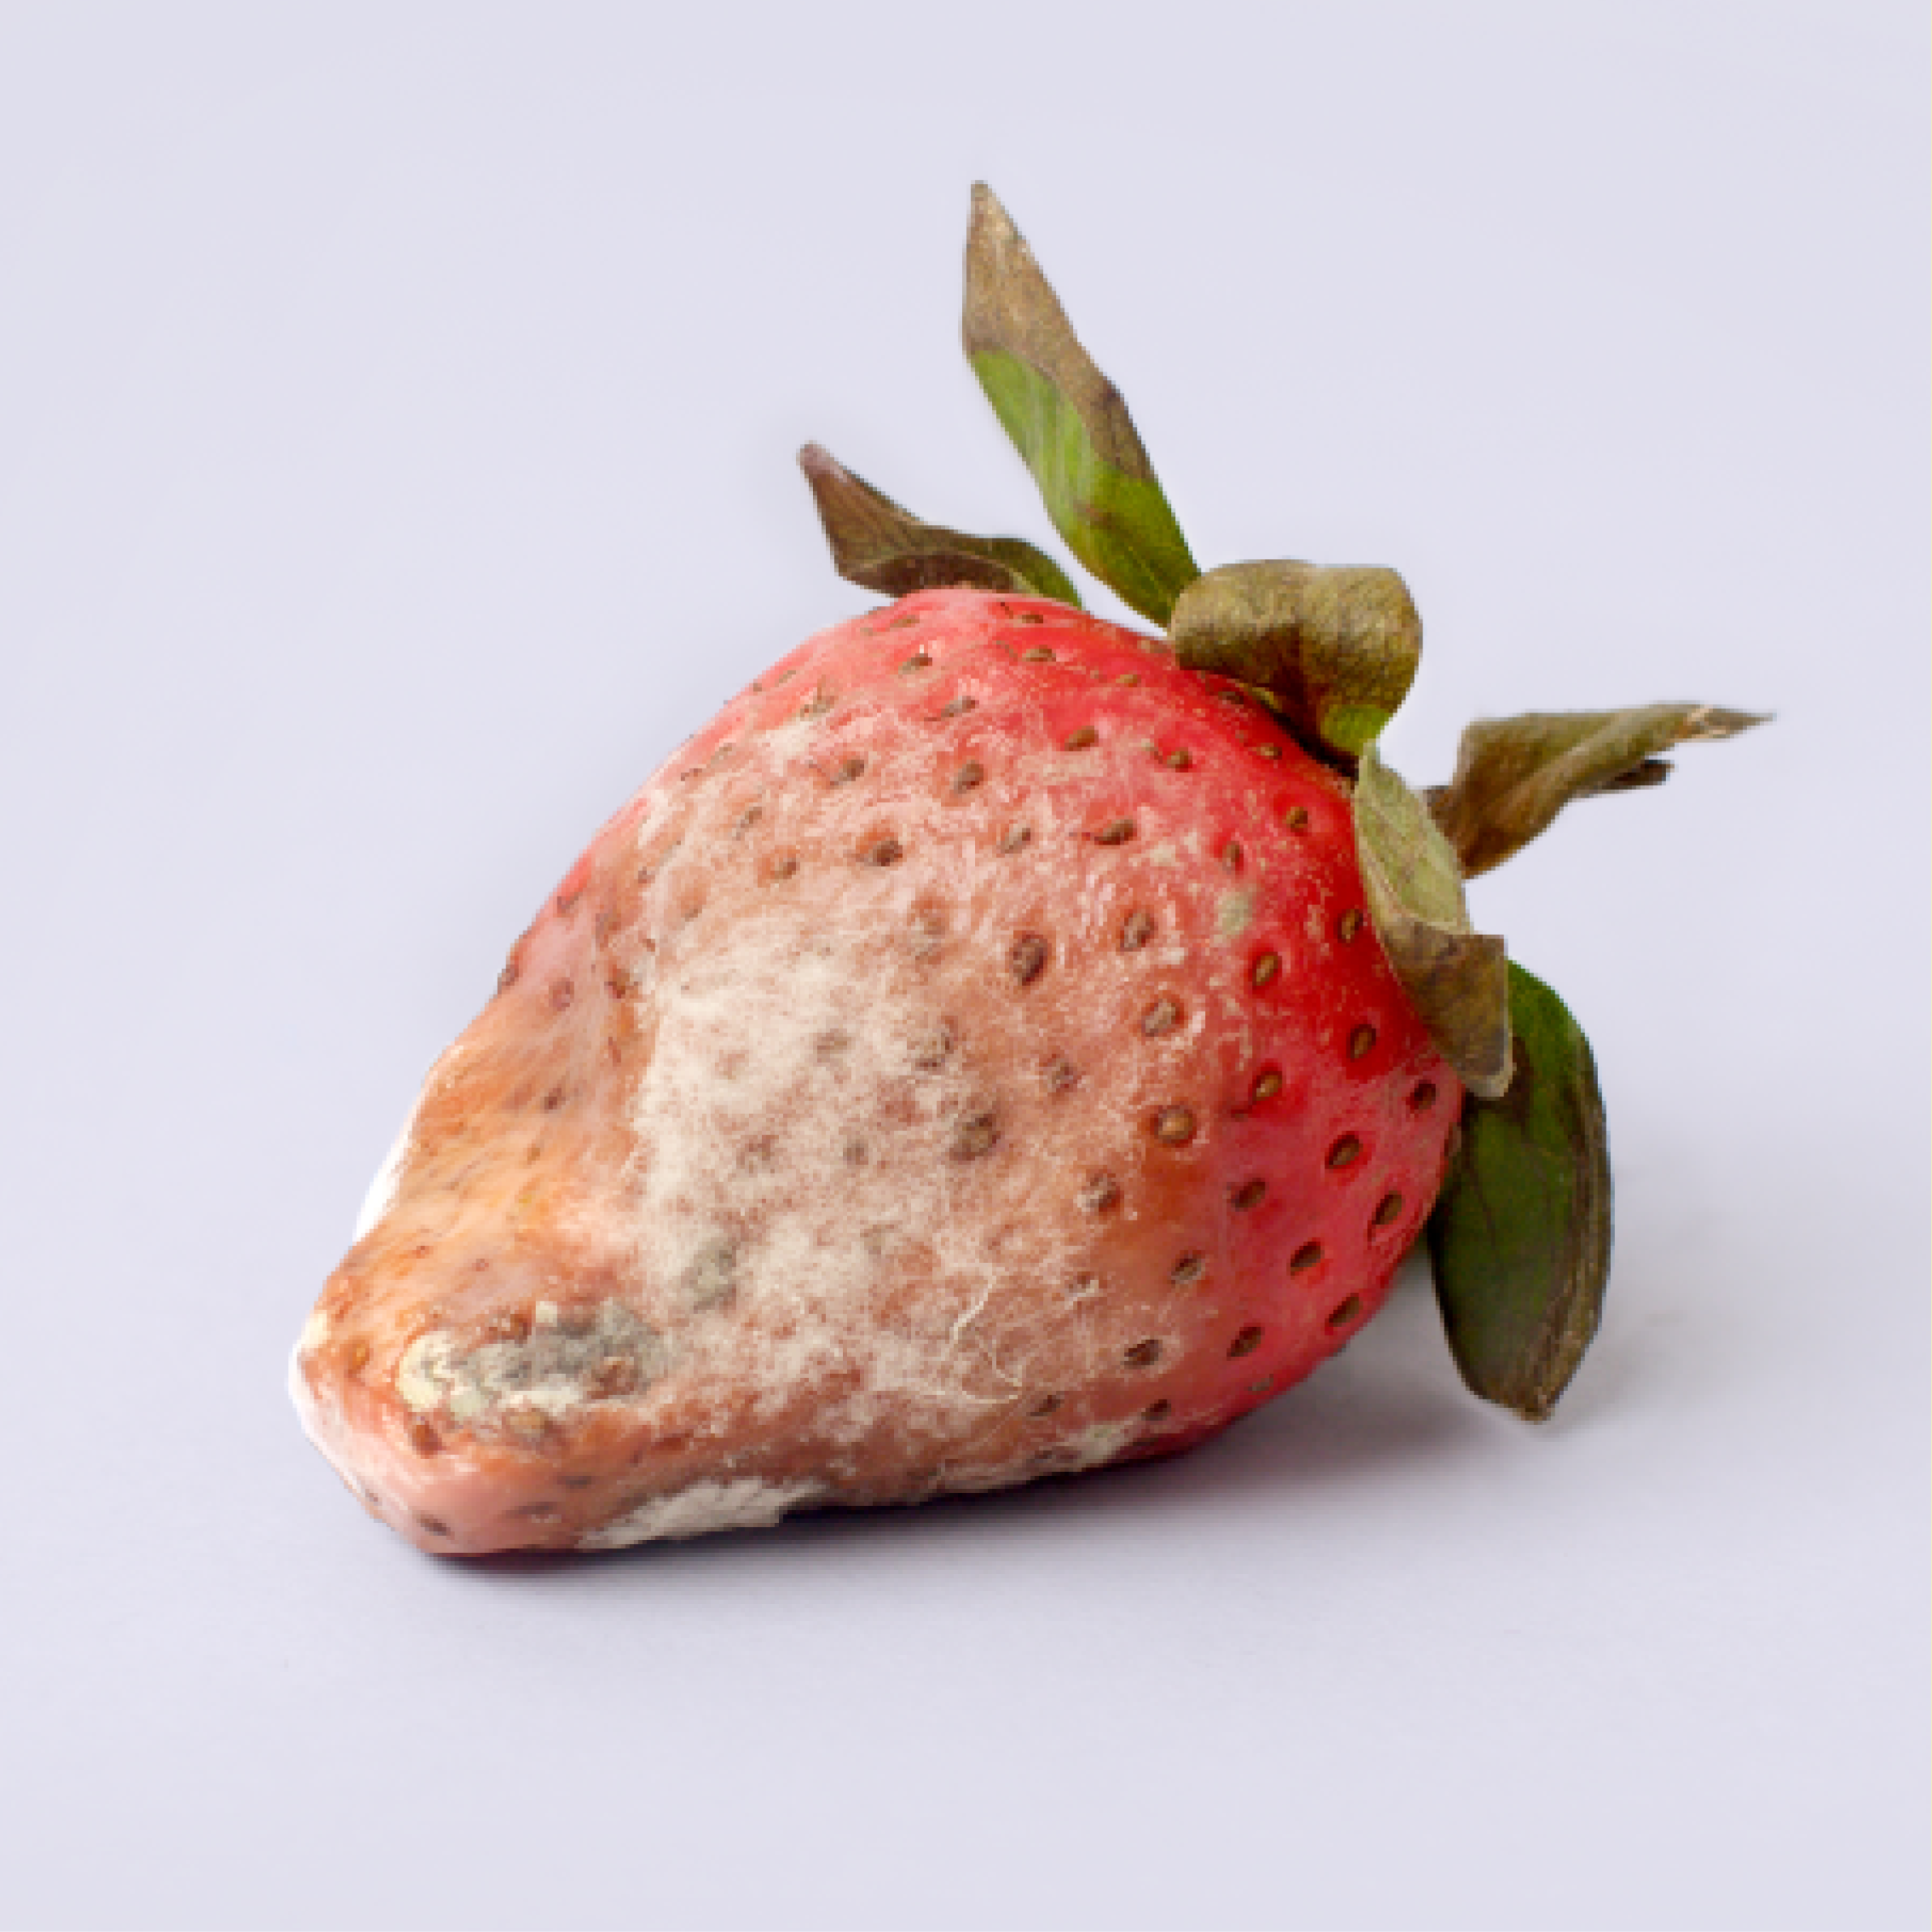 Rotting strawberry